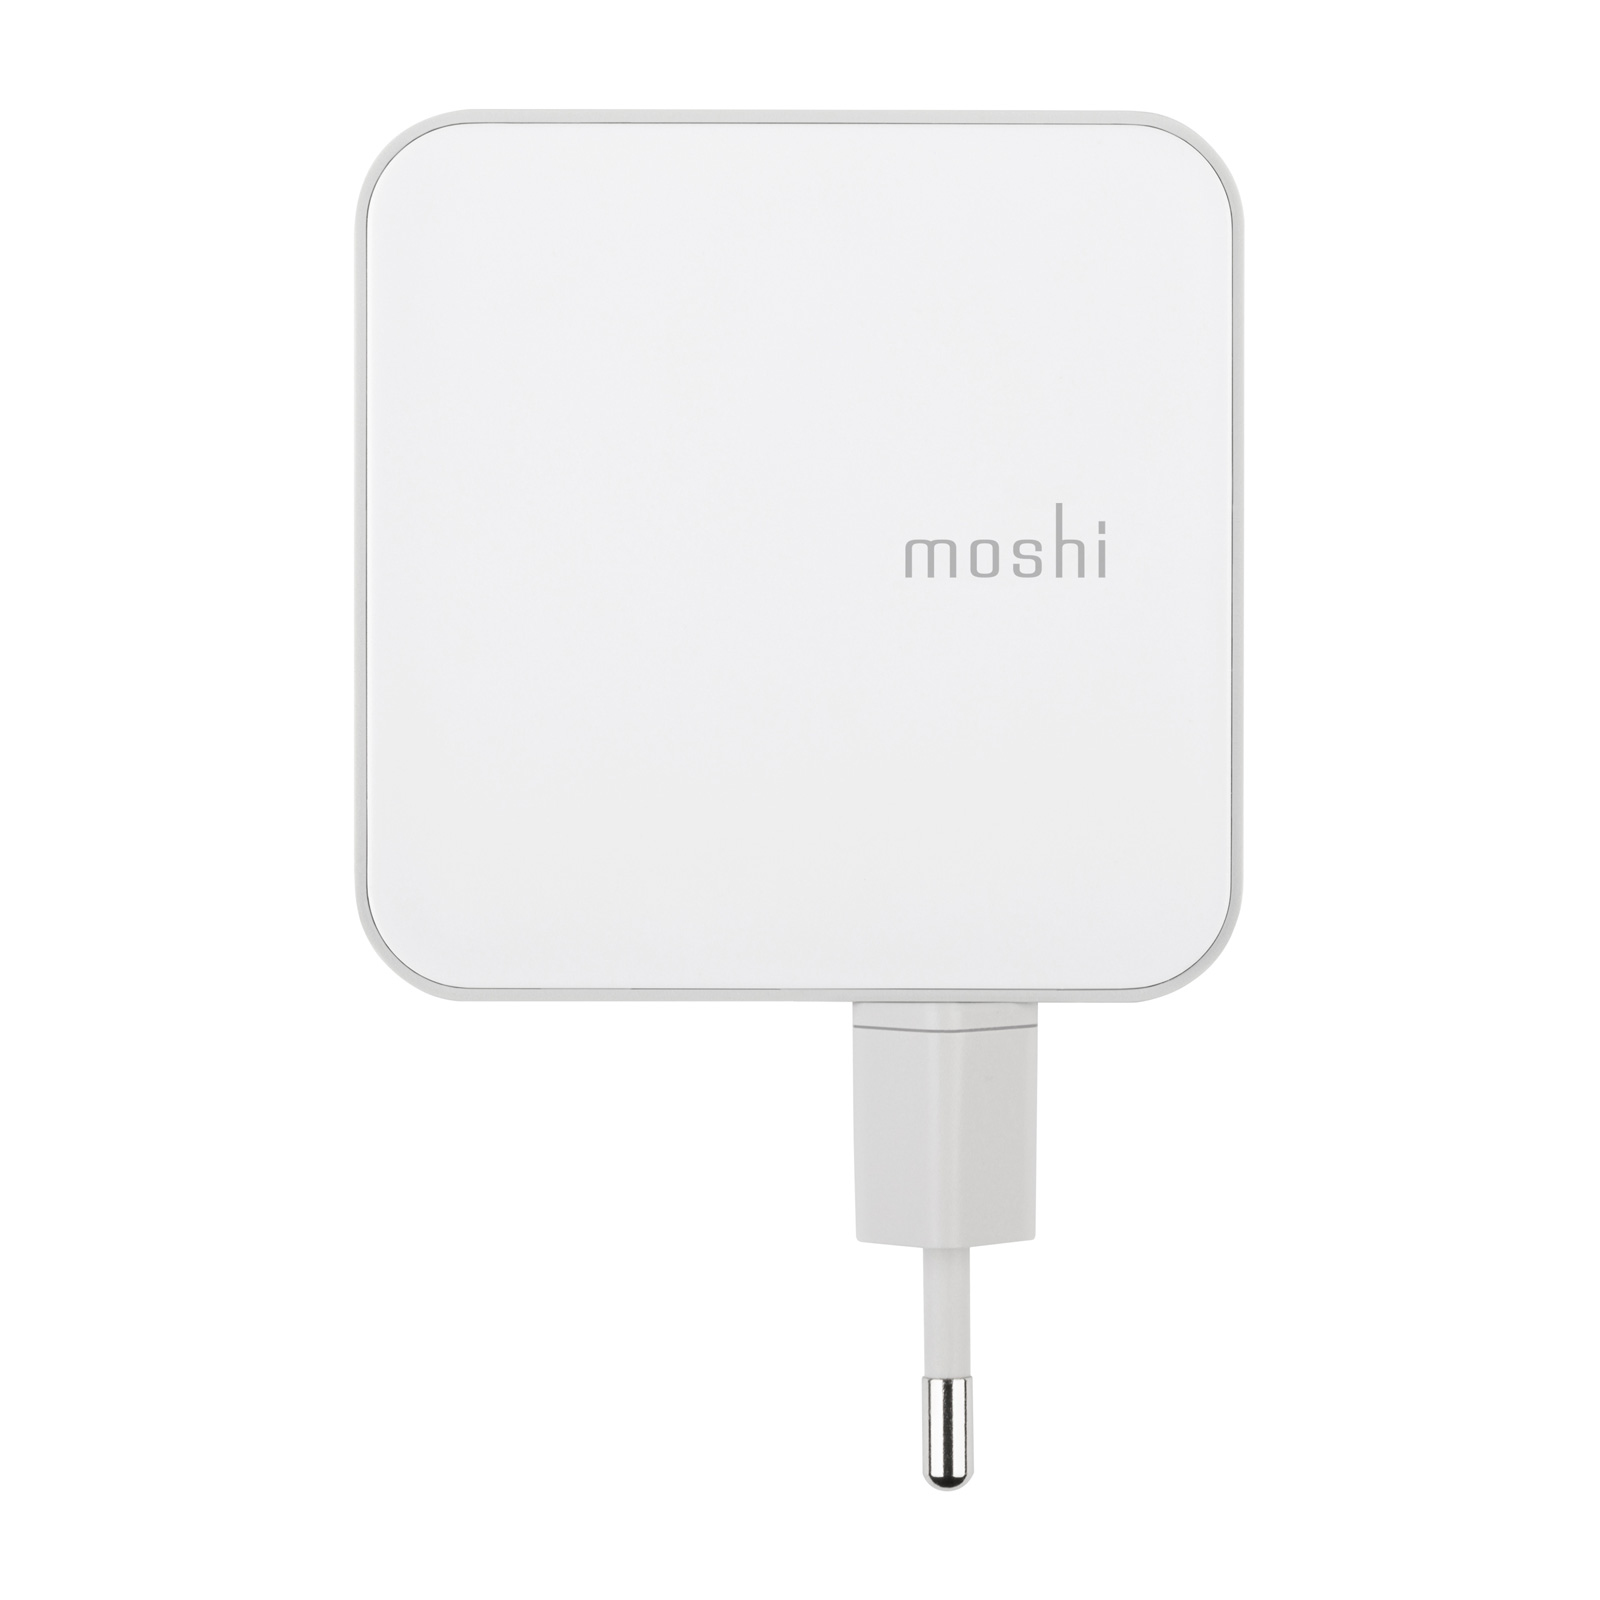 Moshi ProGeo 4-Port 35W USB Wall Charger